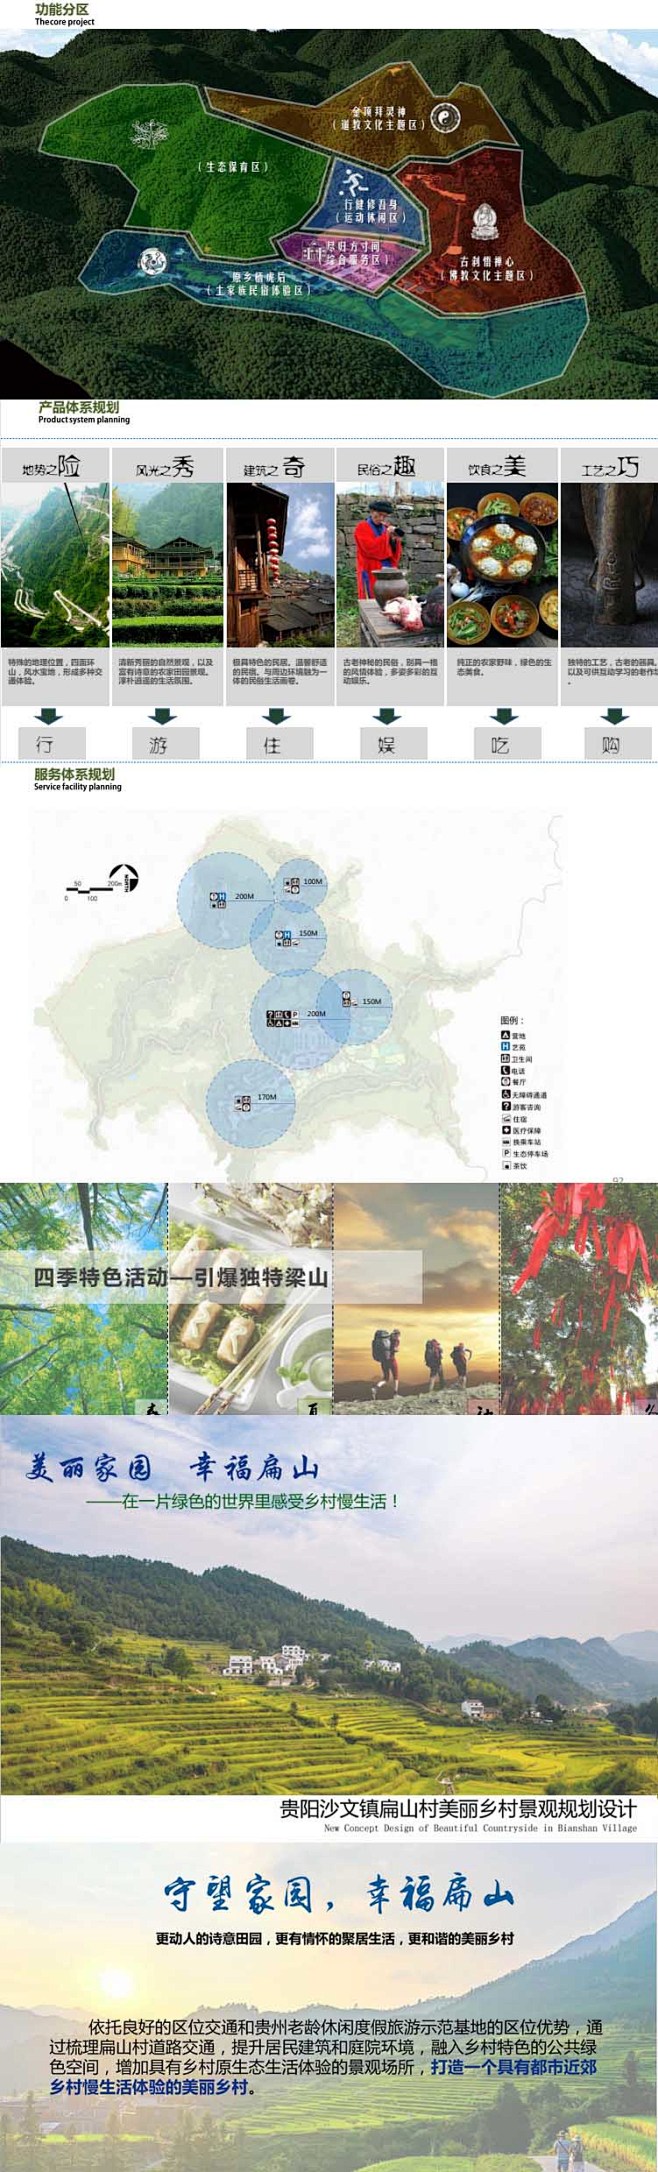 W17文旅项目文本美丽乡村旅游规划农业观...